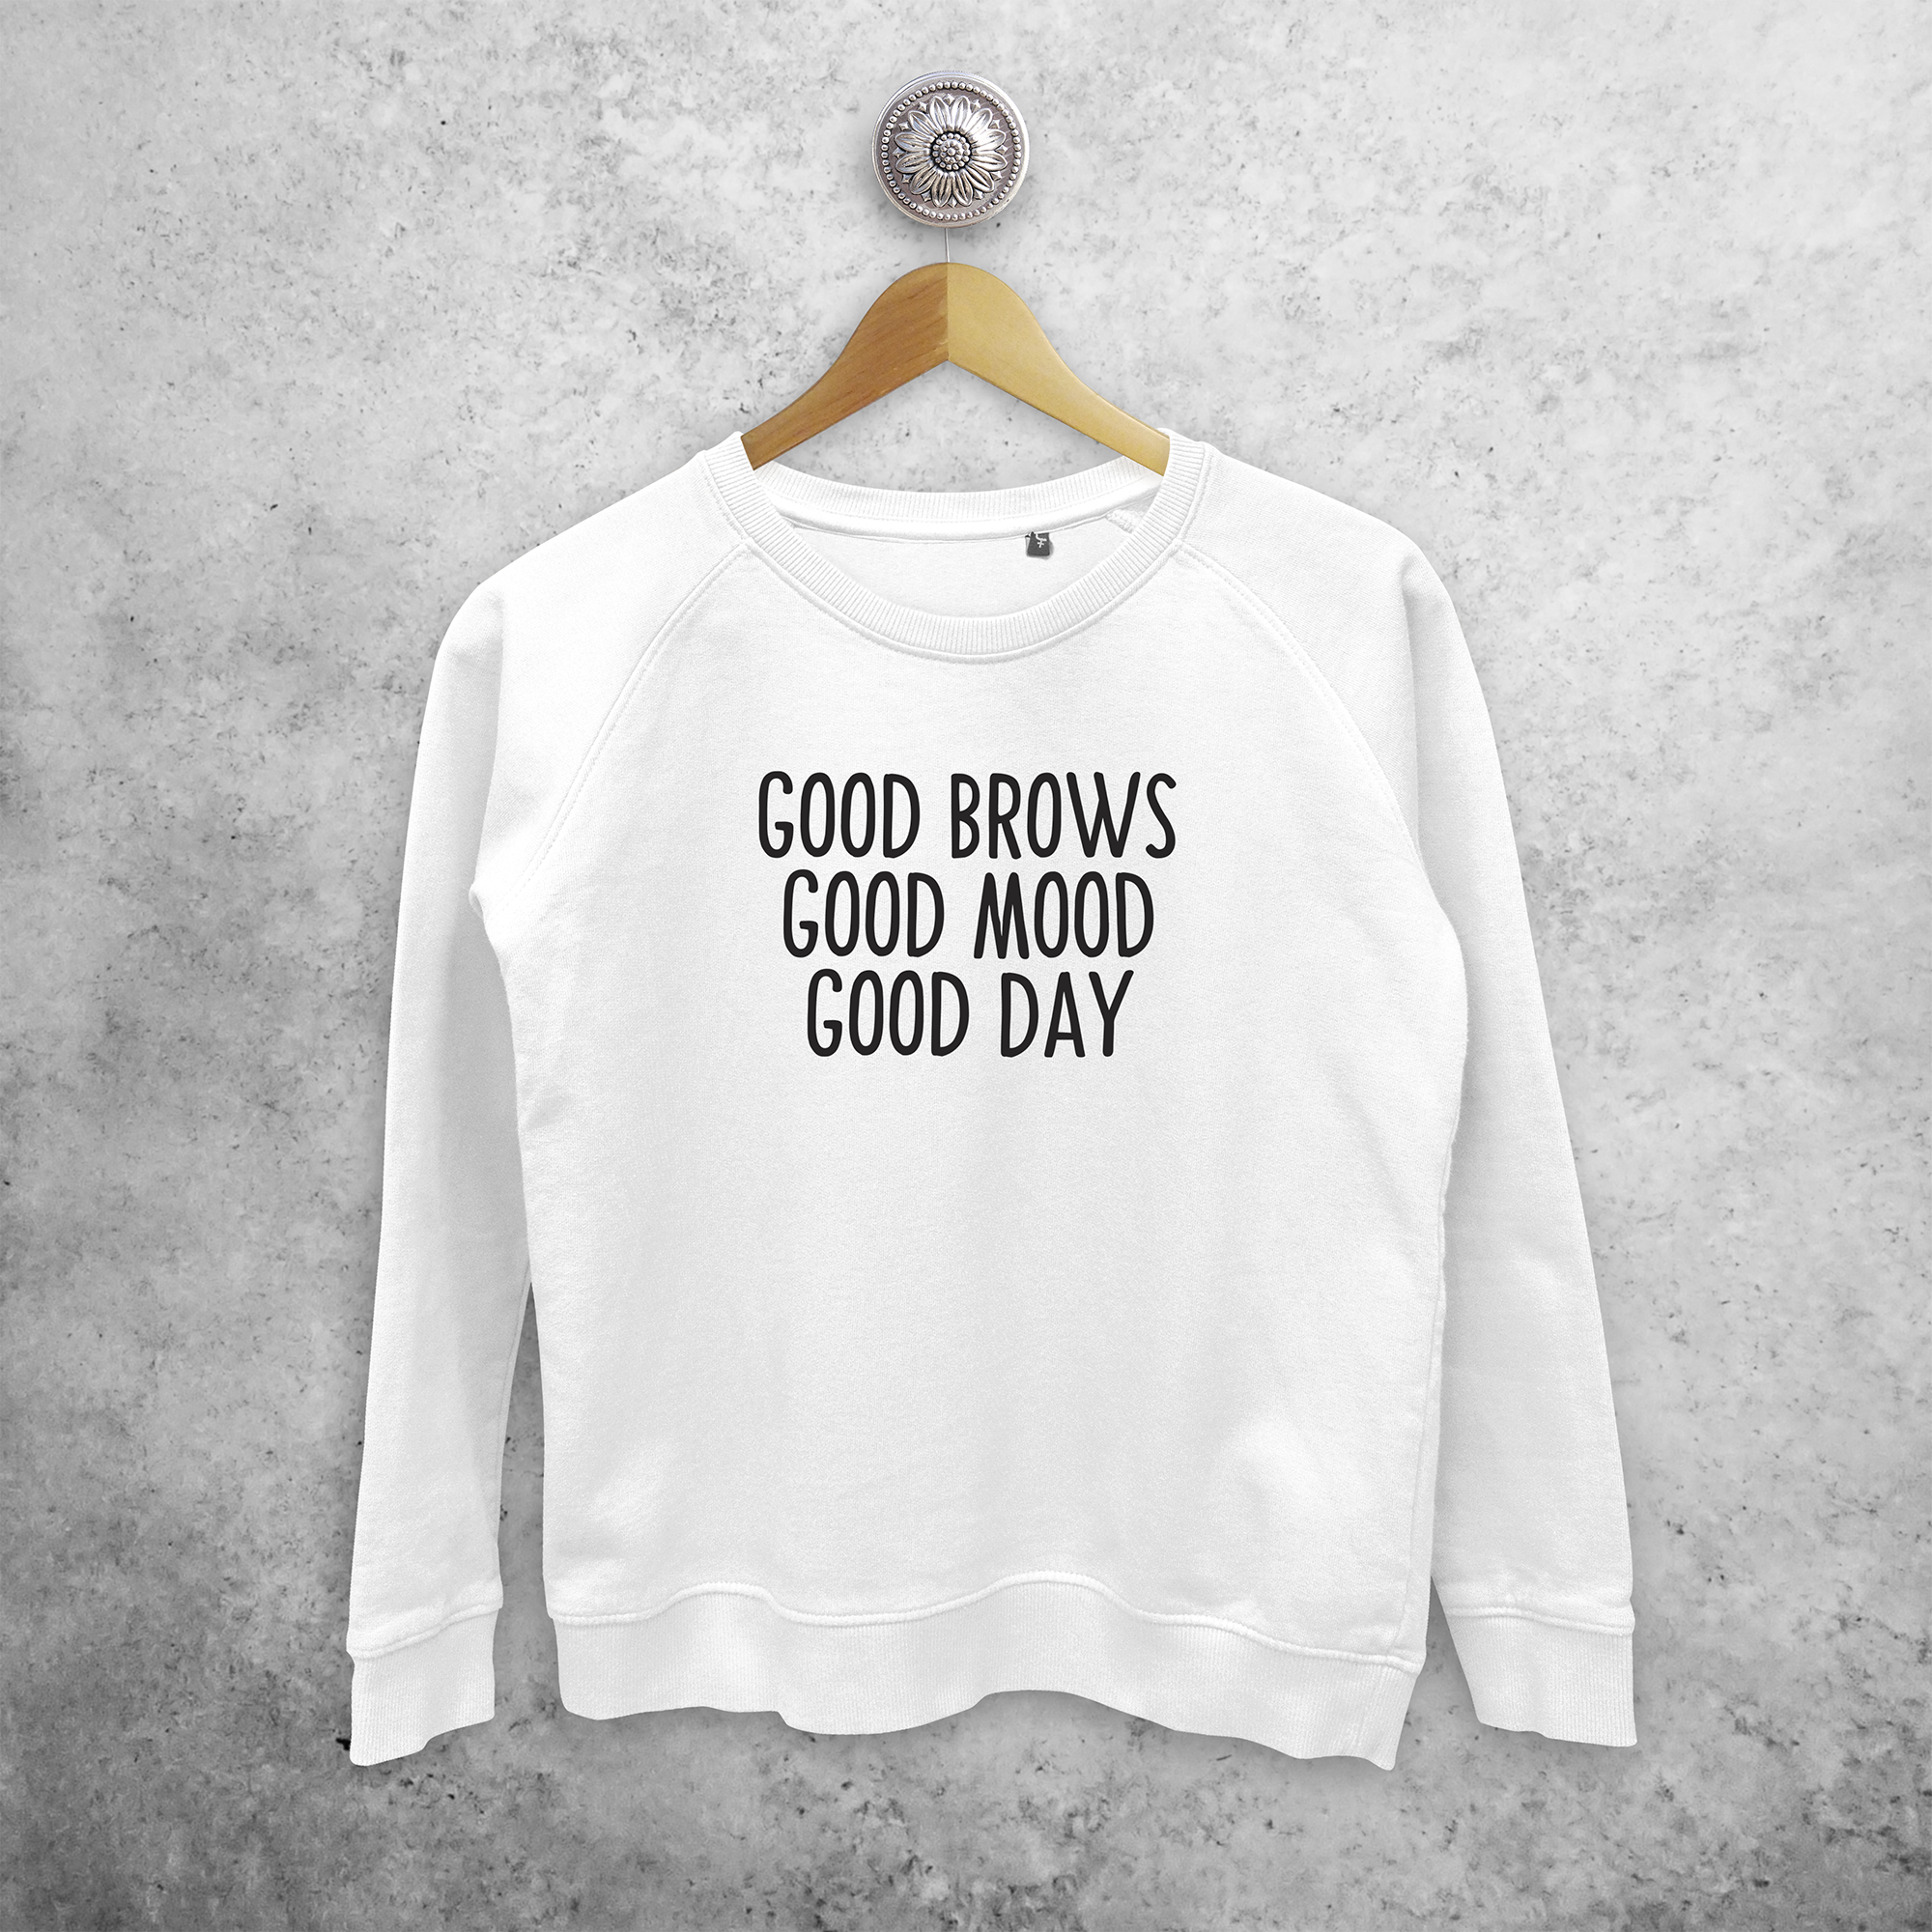 'Good brows, Good mood, Good day' sweater